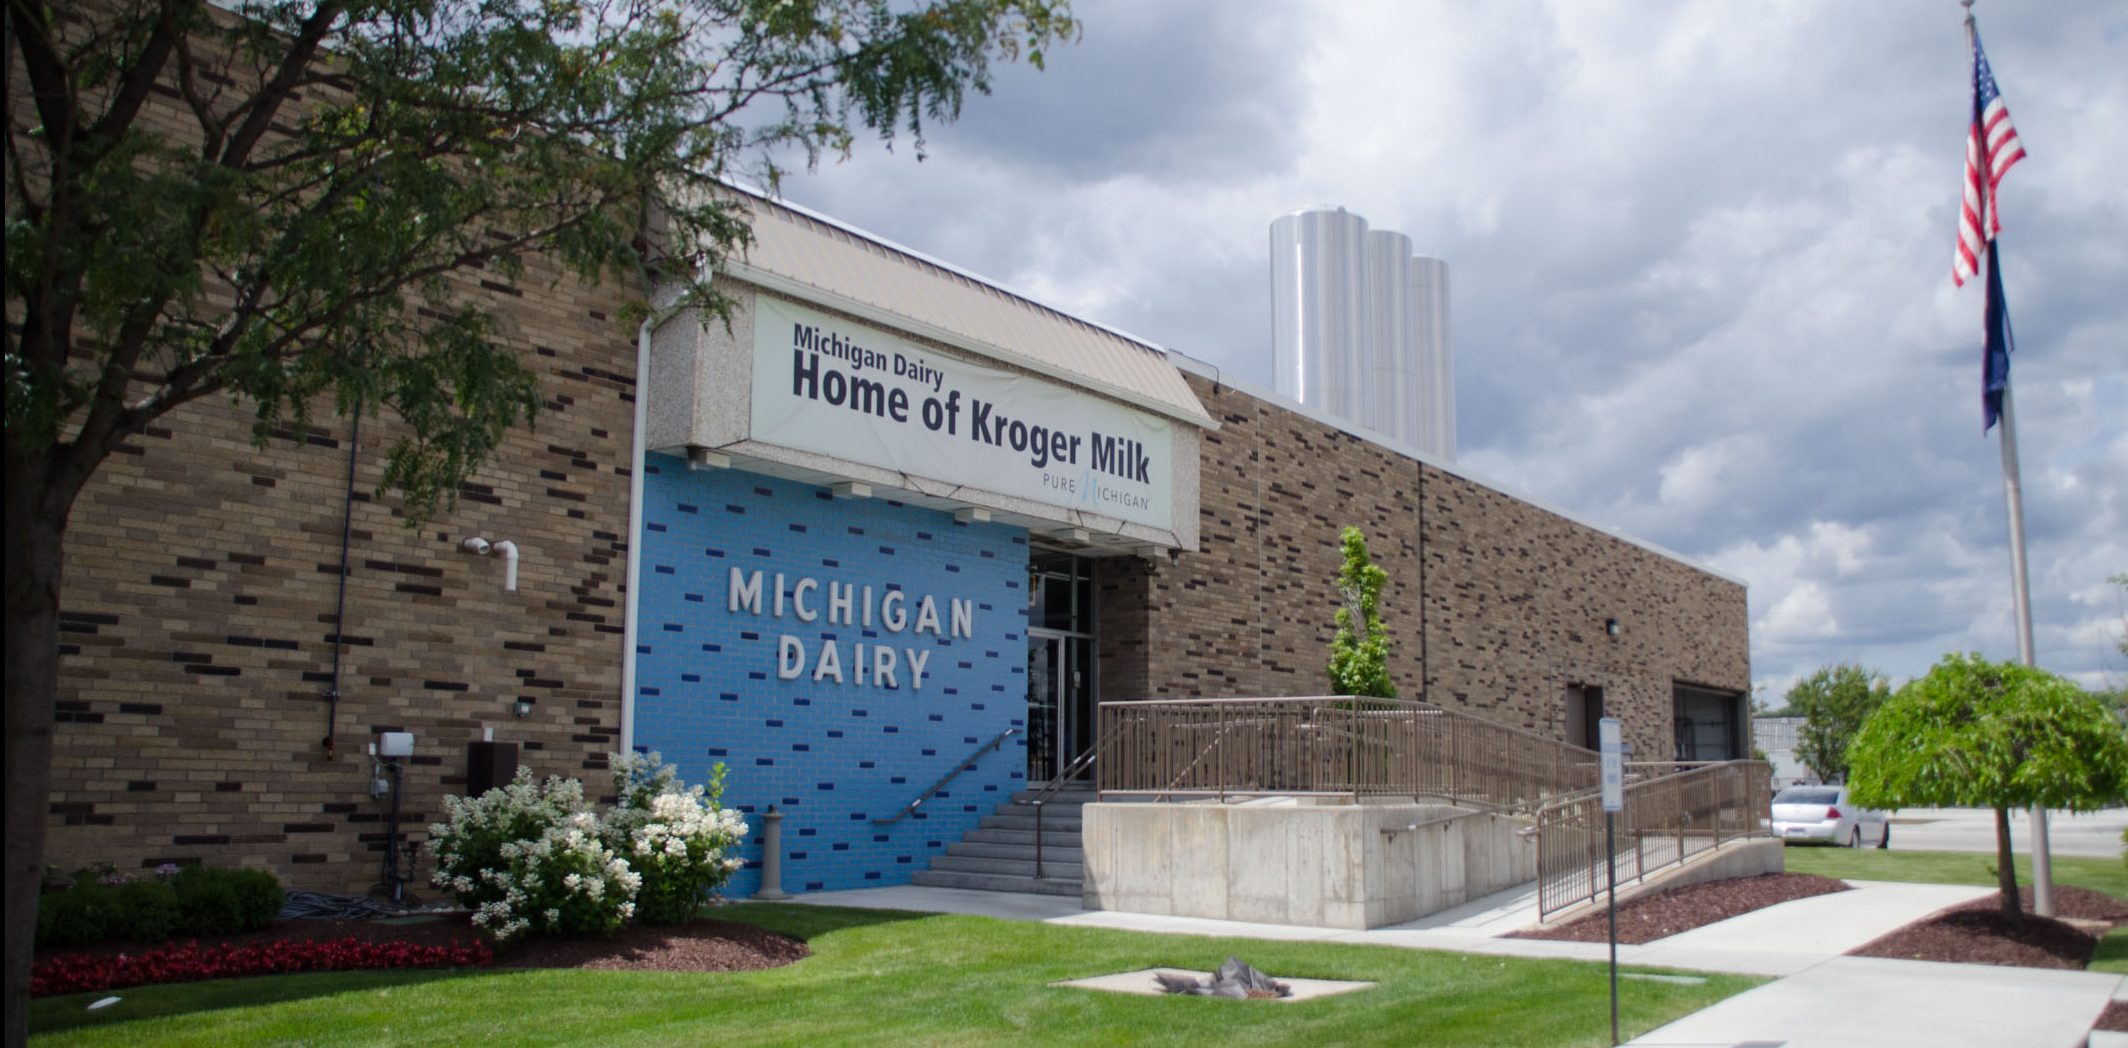 Michigan Dairy in Livonia